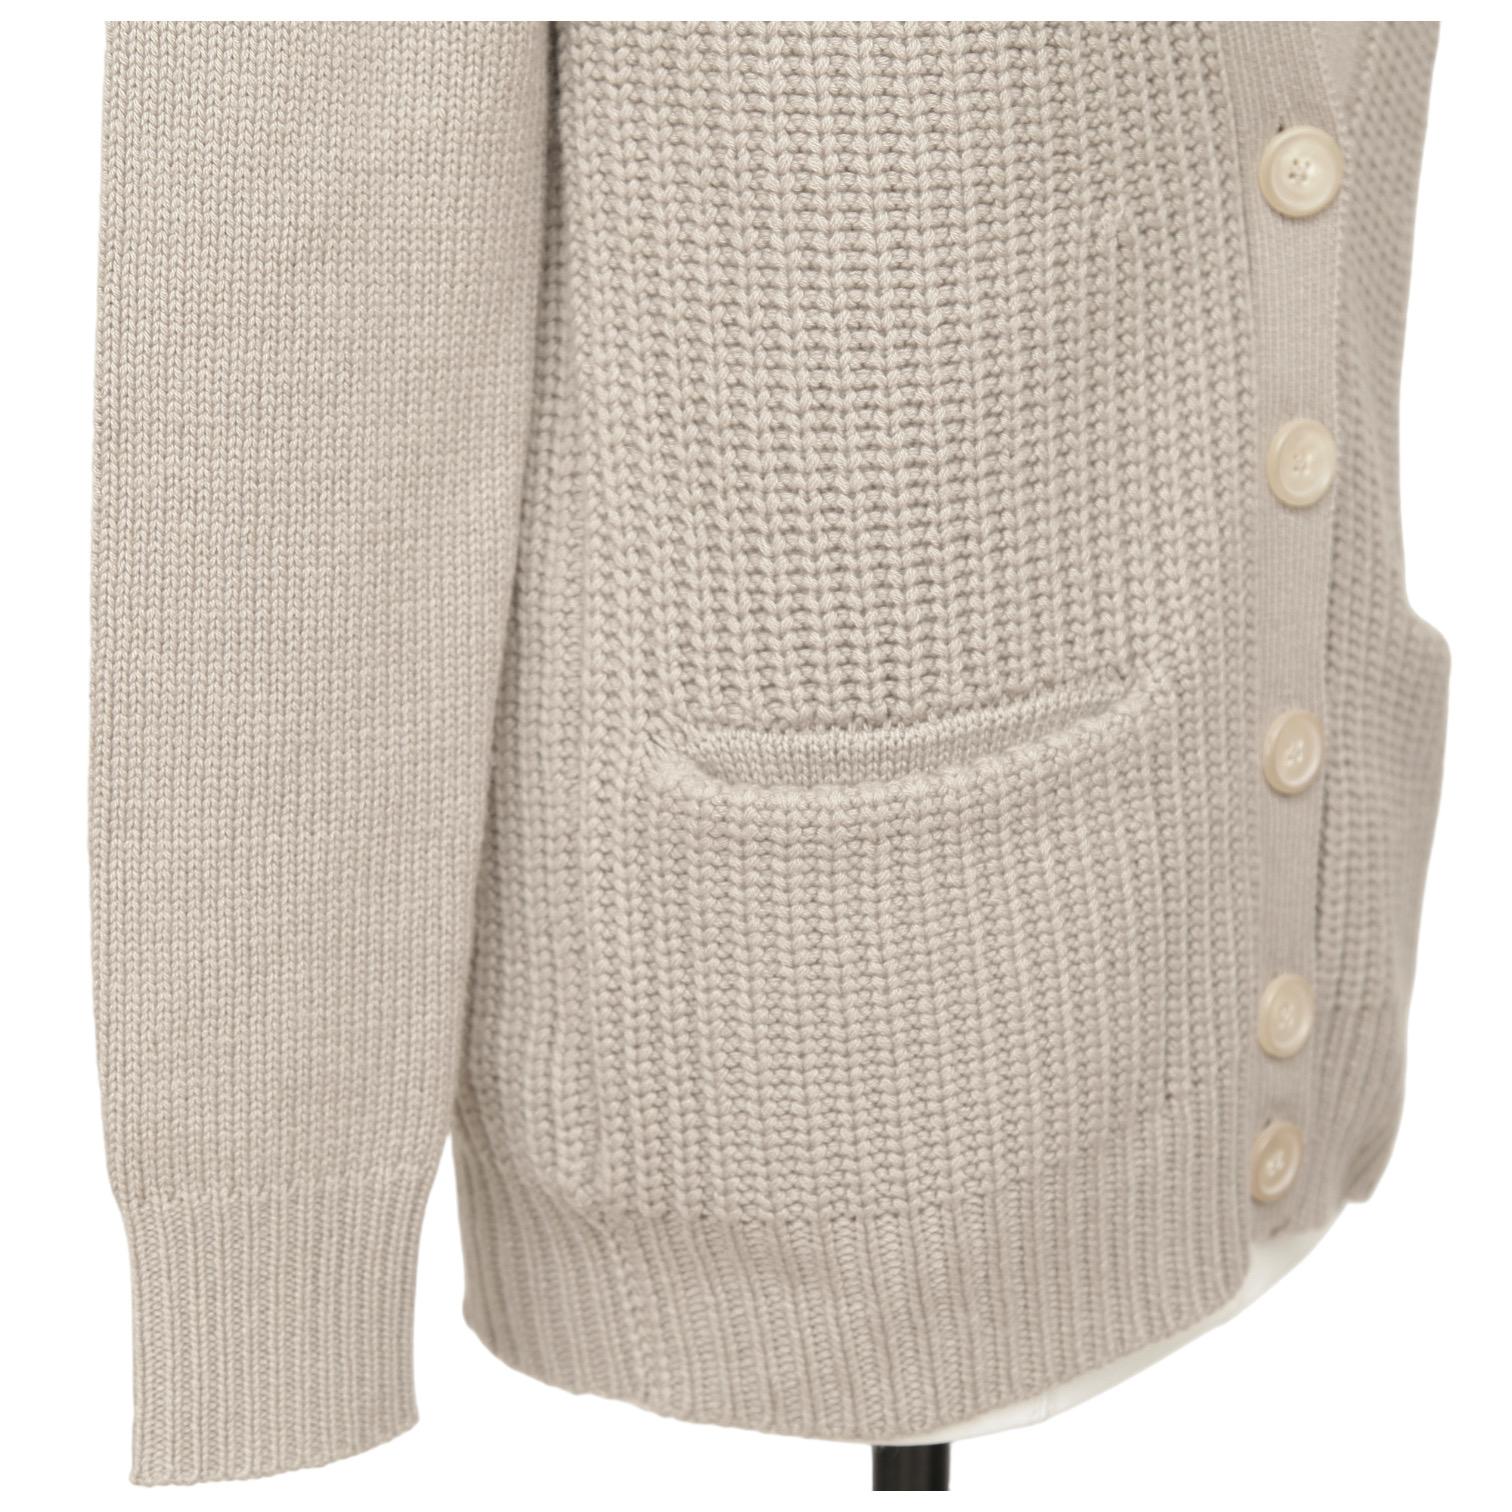 CHLOE Cardigan Sweater Long Sleeve Beige Knit Buttons Pockets Sz XS 2011 $895 For Sale 2